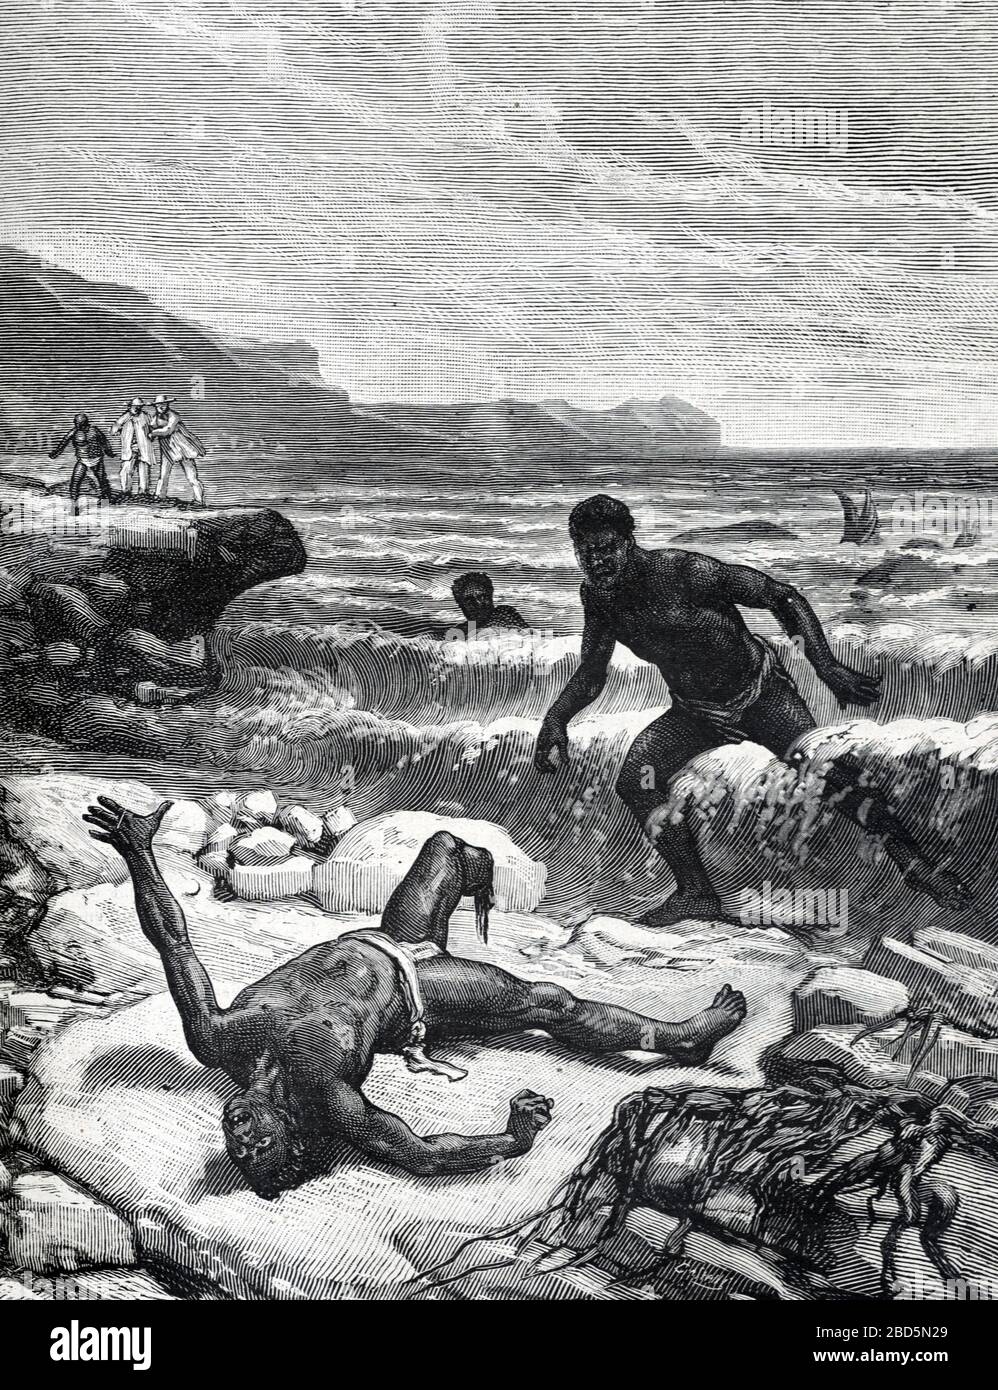 Malgascio uomo o squalo pescatore perde gamba in Shark attacco al largo della costa del Madagascar. Vintage o Old Illustration o Engraving 1882 Foto Stock